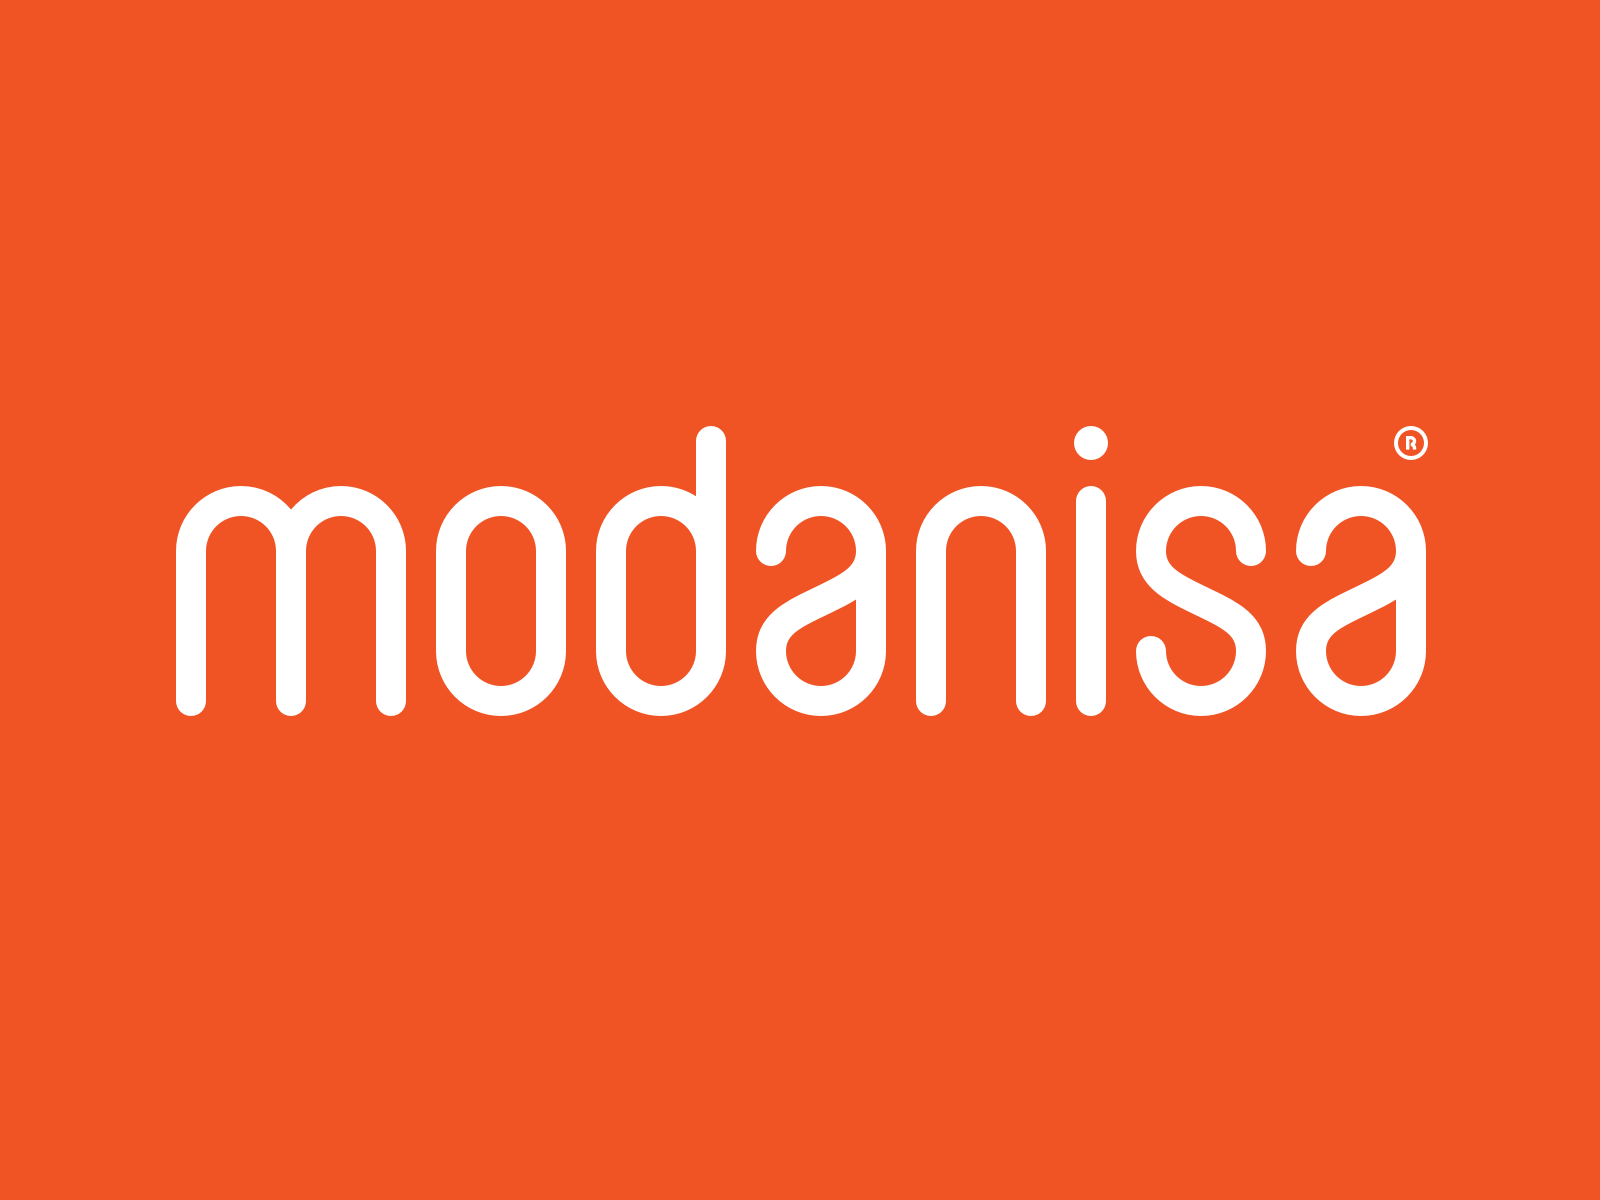 Modanisa - Logotype by Taygun on Dribbble